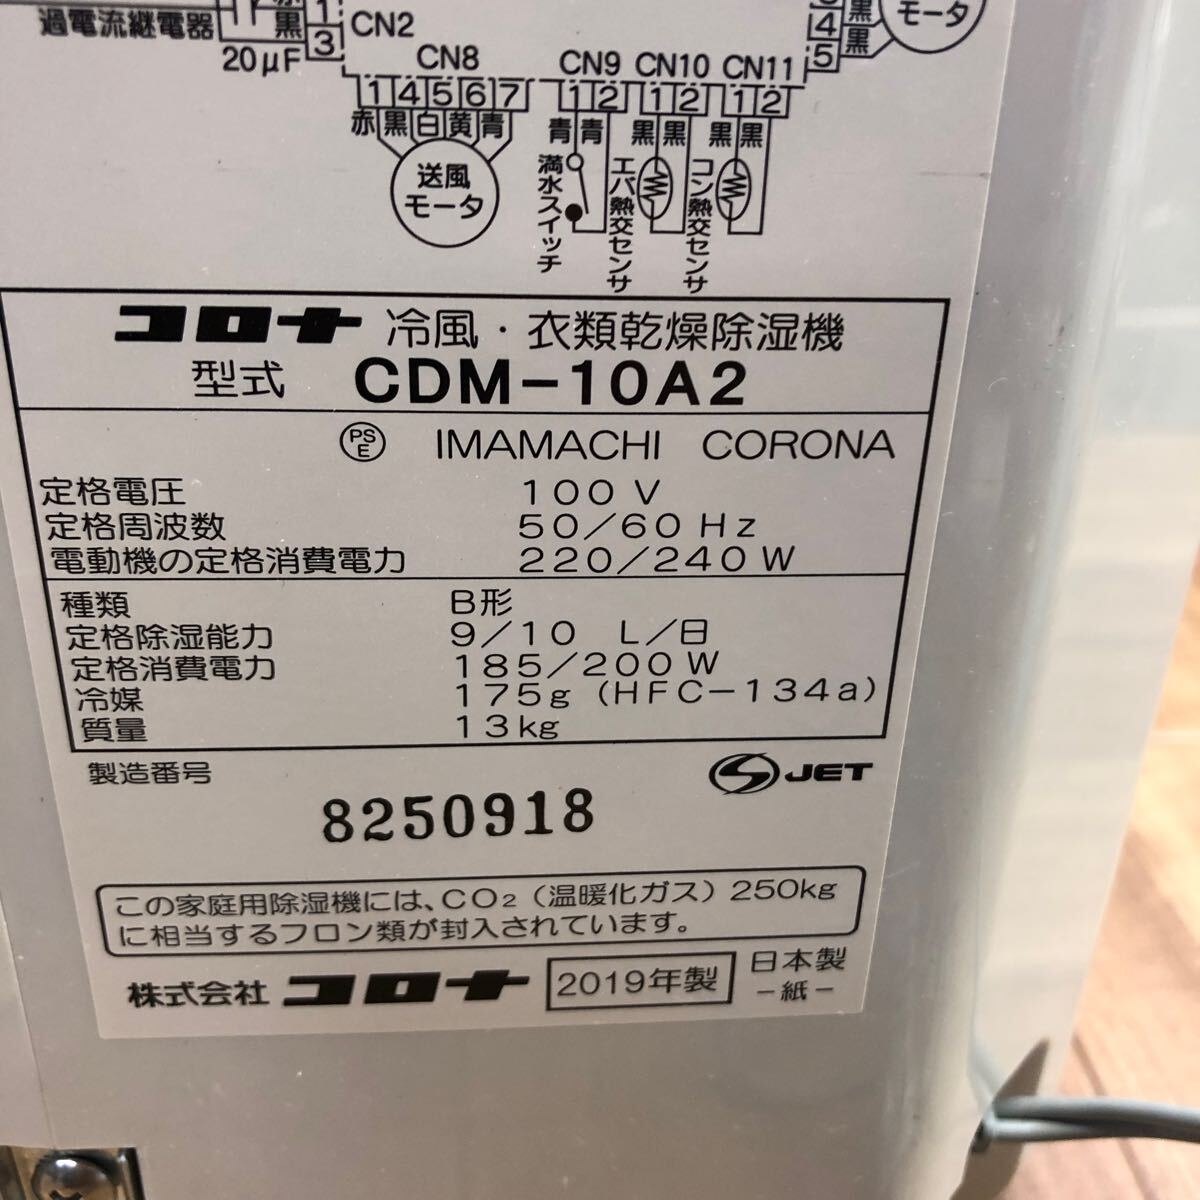 CKT-240404-31 CORONA Corona cold manner clothes dry dehumidifier CDM-10A2 2019 year made operation verification ending 